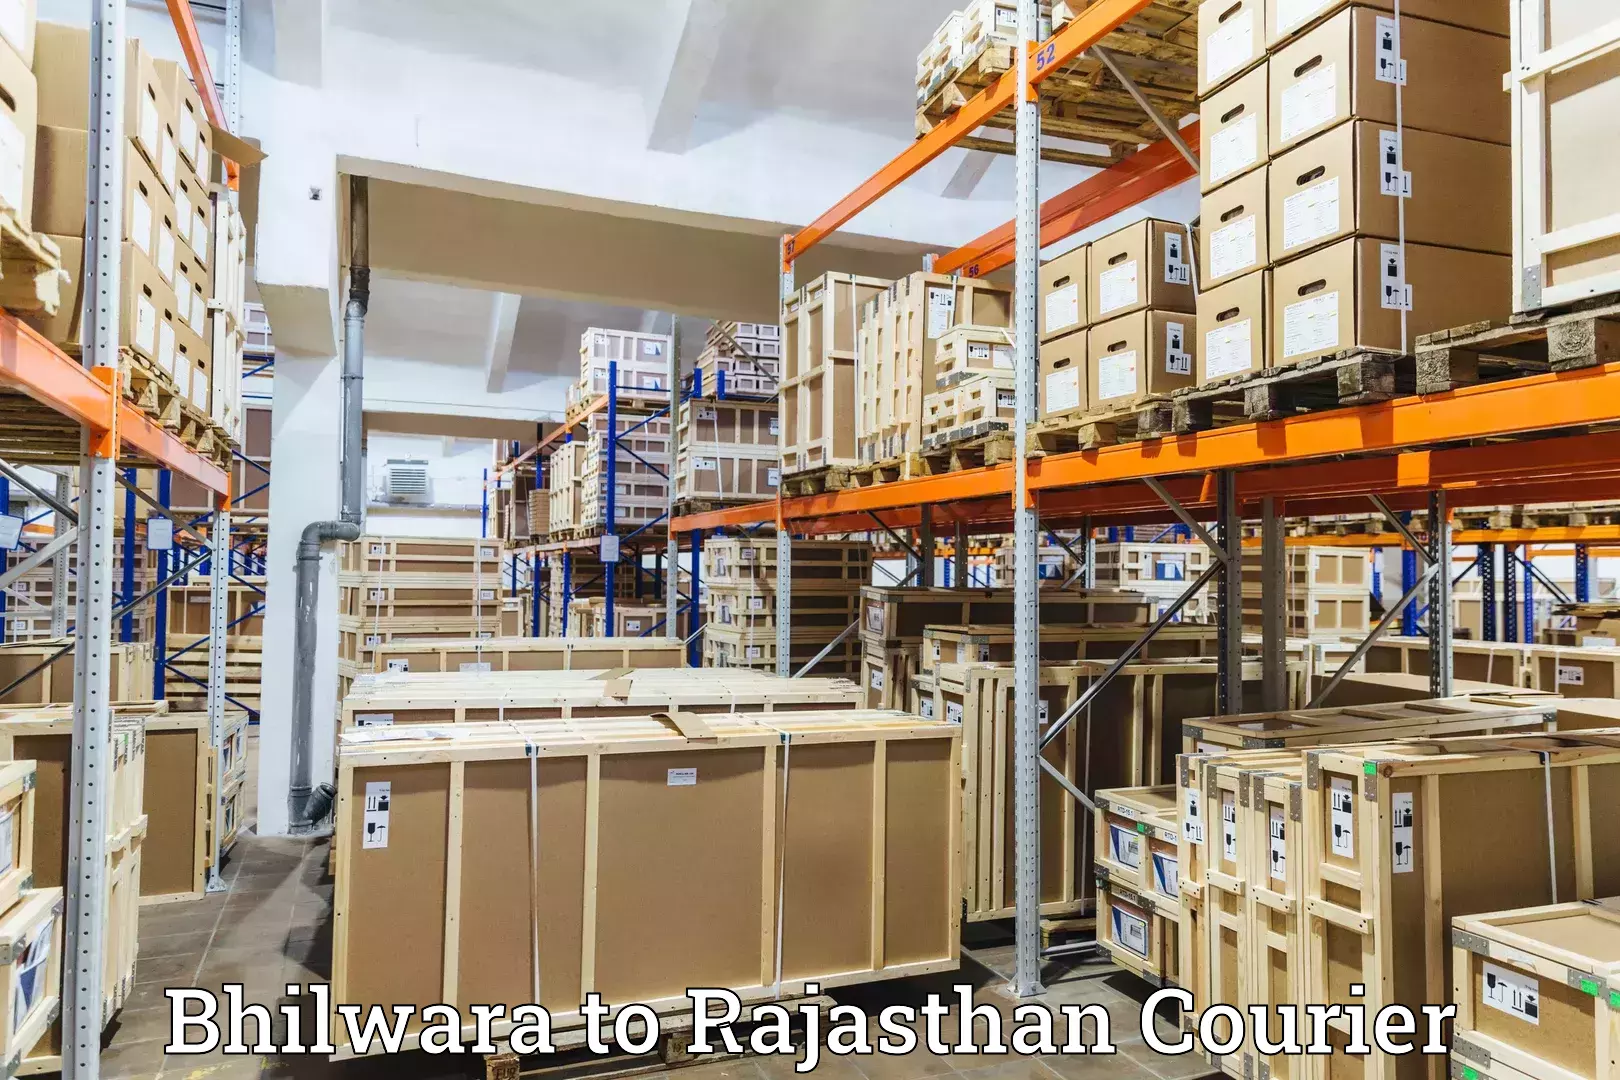 State-of-the-art courier technology Bhilwara to Mandalgarh